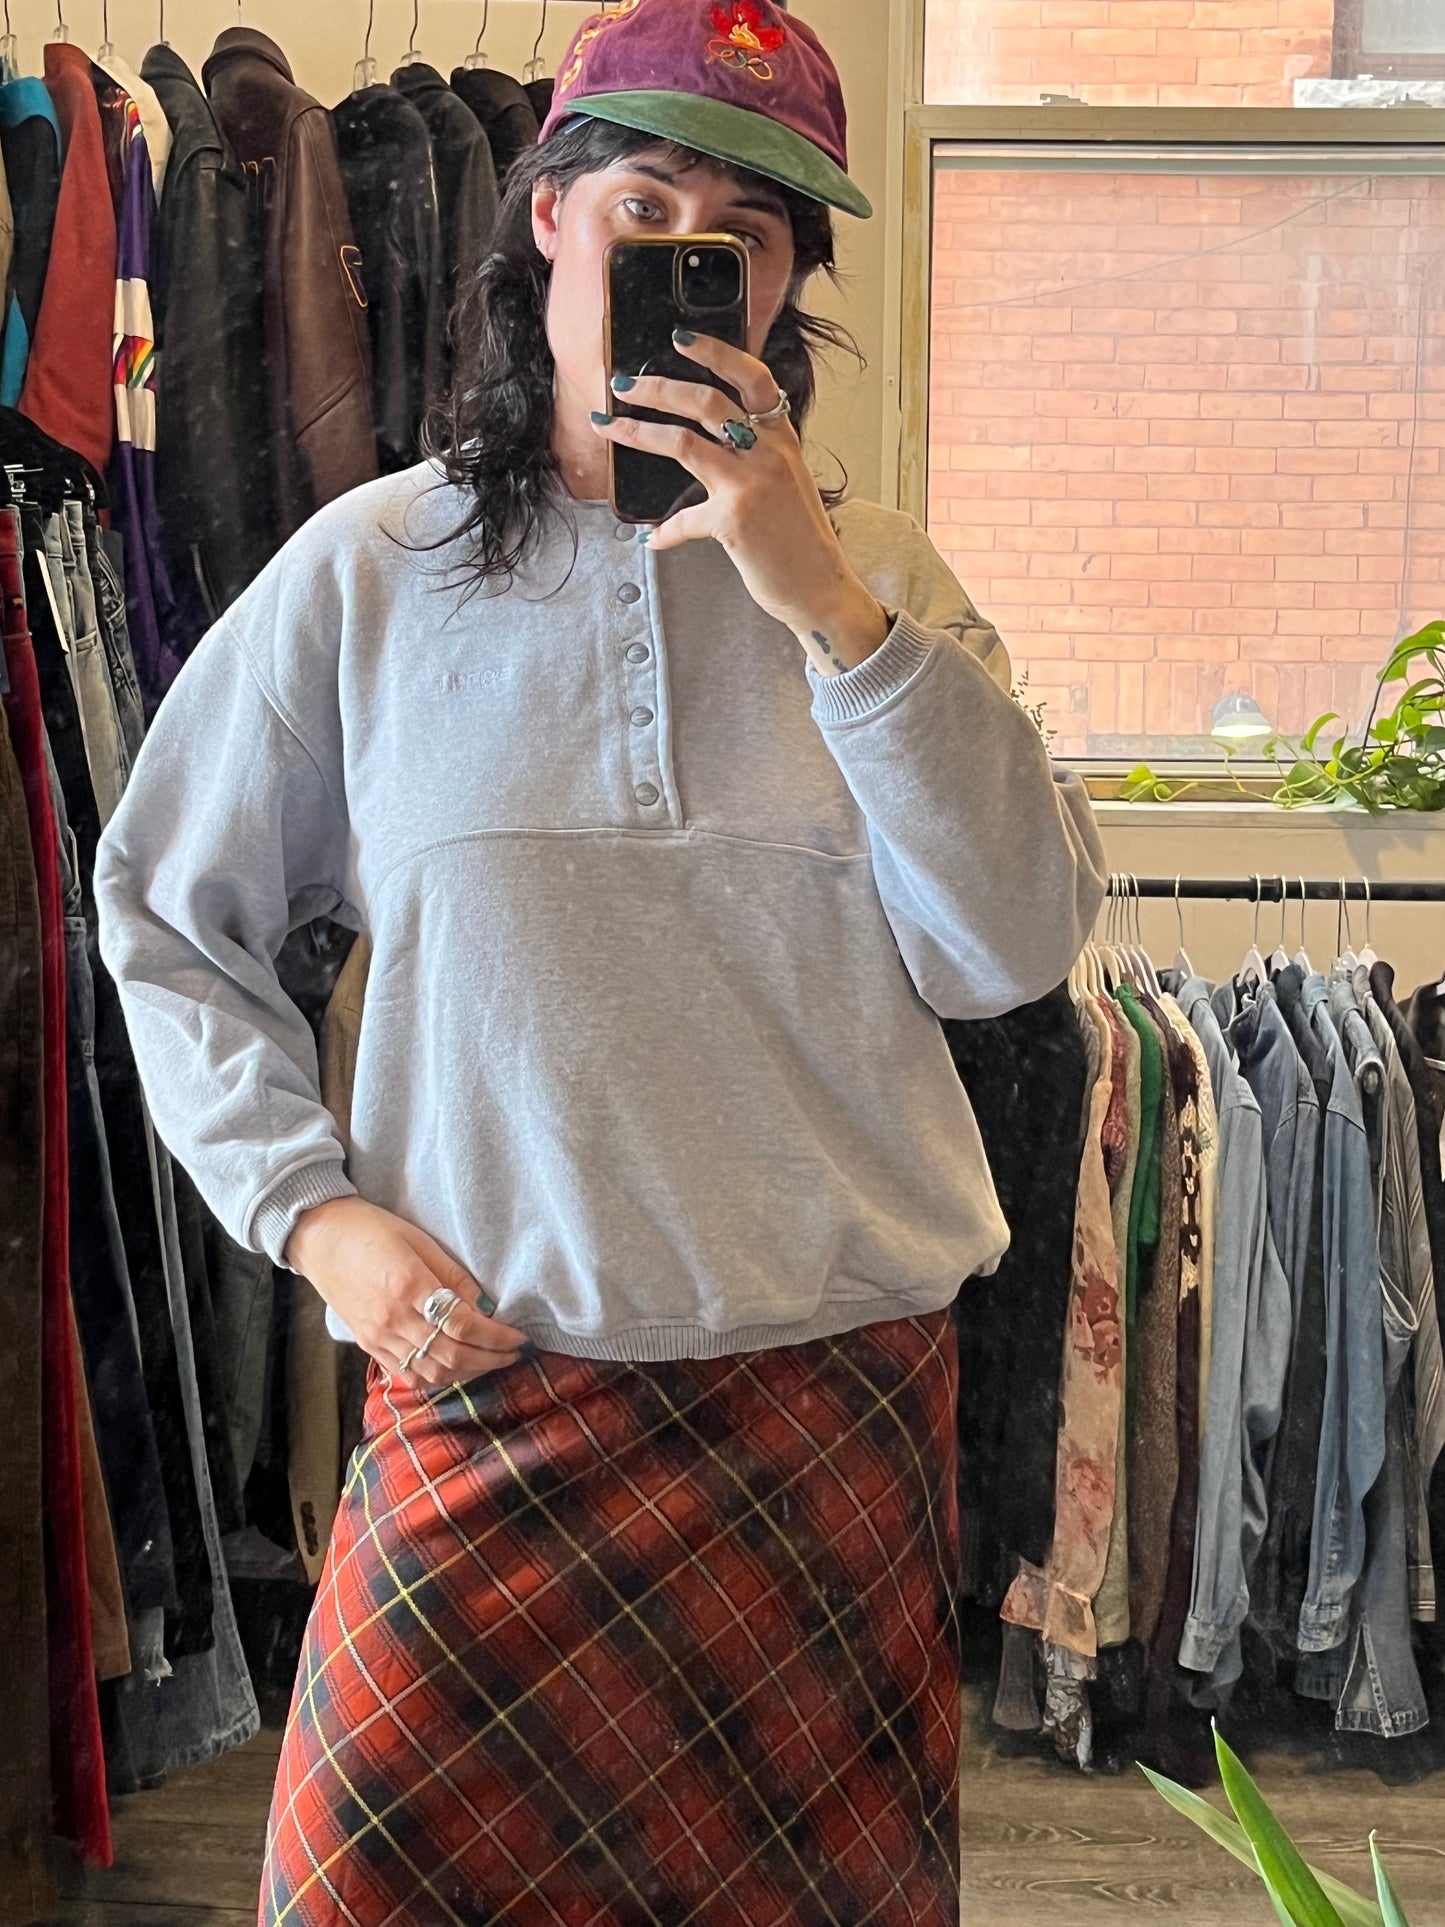 90’s Vintage Heather Grey Half Button Down Crew Sweater / Size L